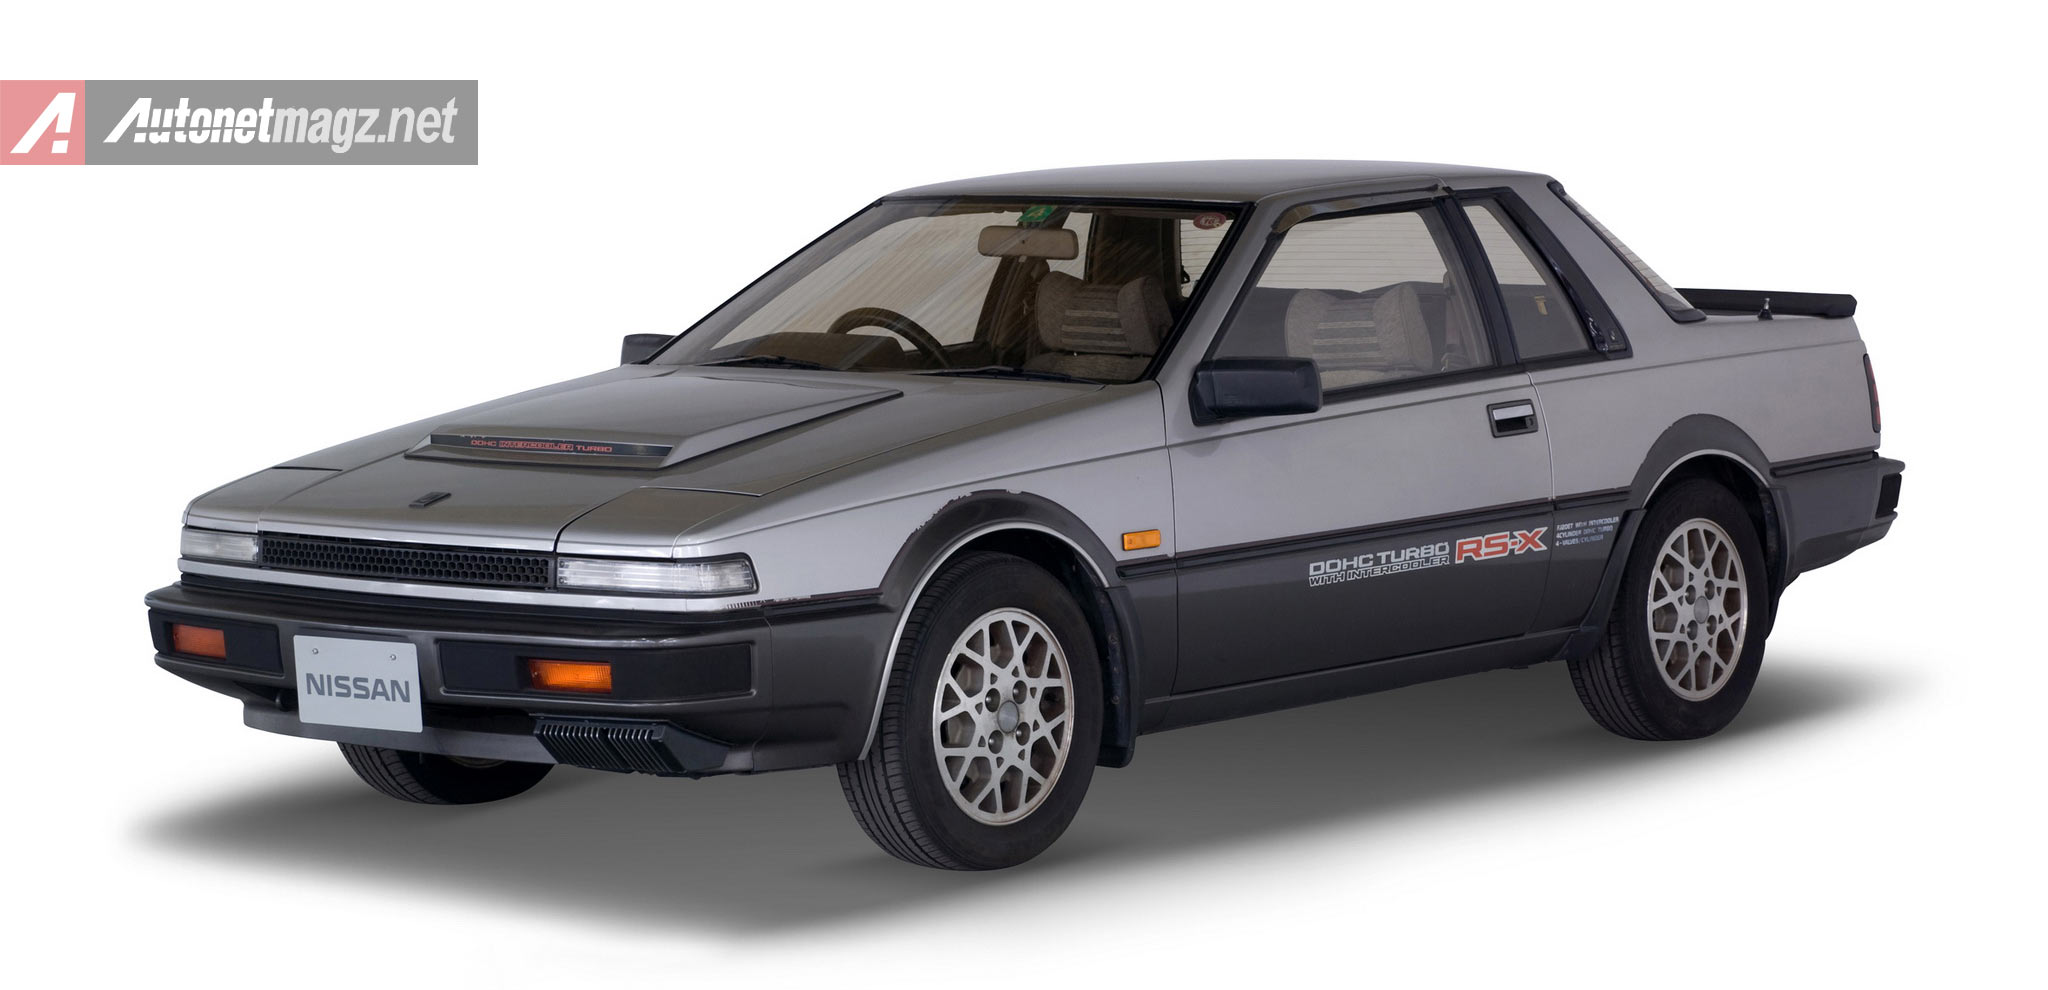 Berita, Nissan-Silvia-Coupe: Ini Dia Sejarah Nissan Silvia [Part 2]